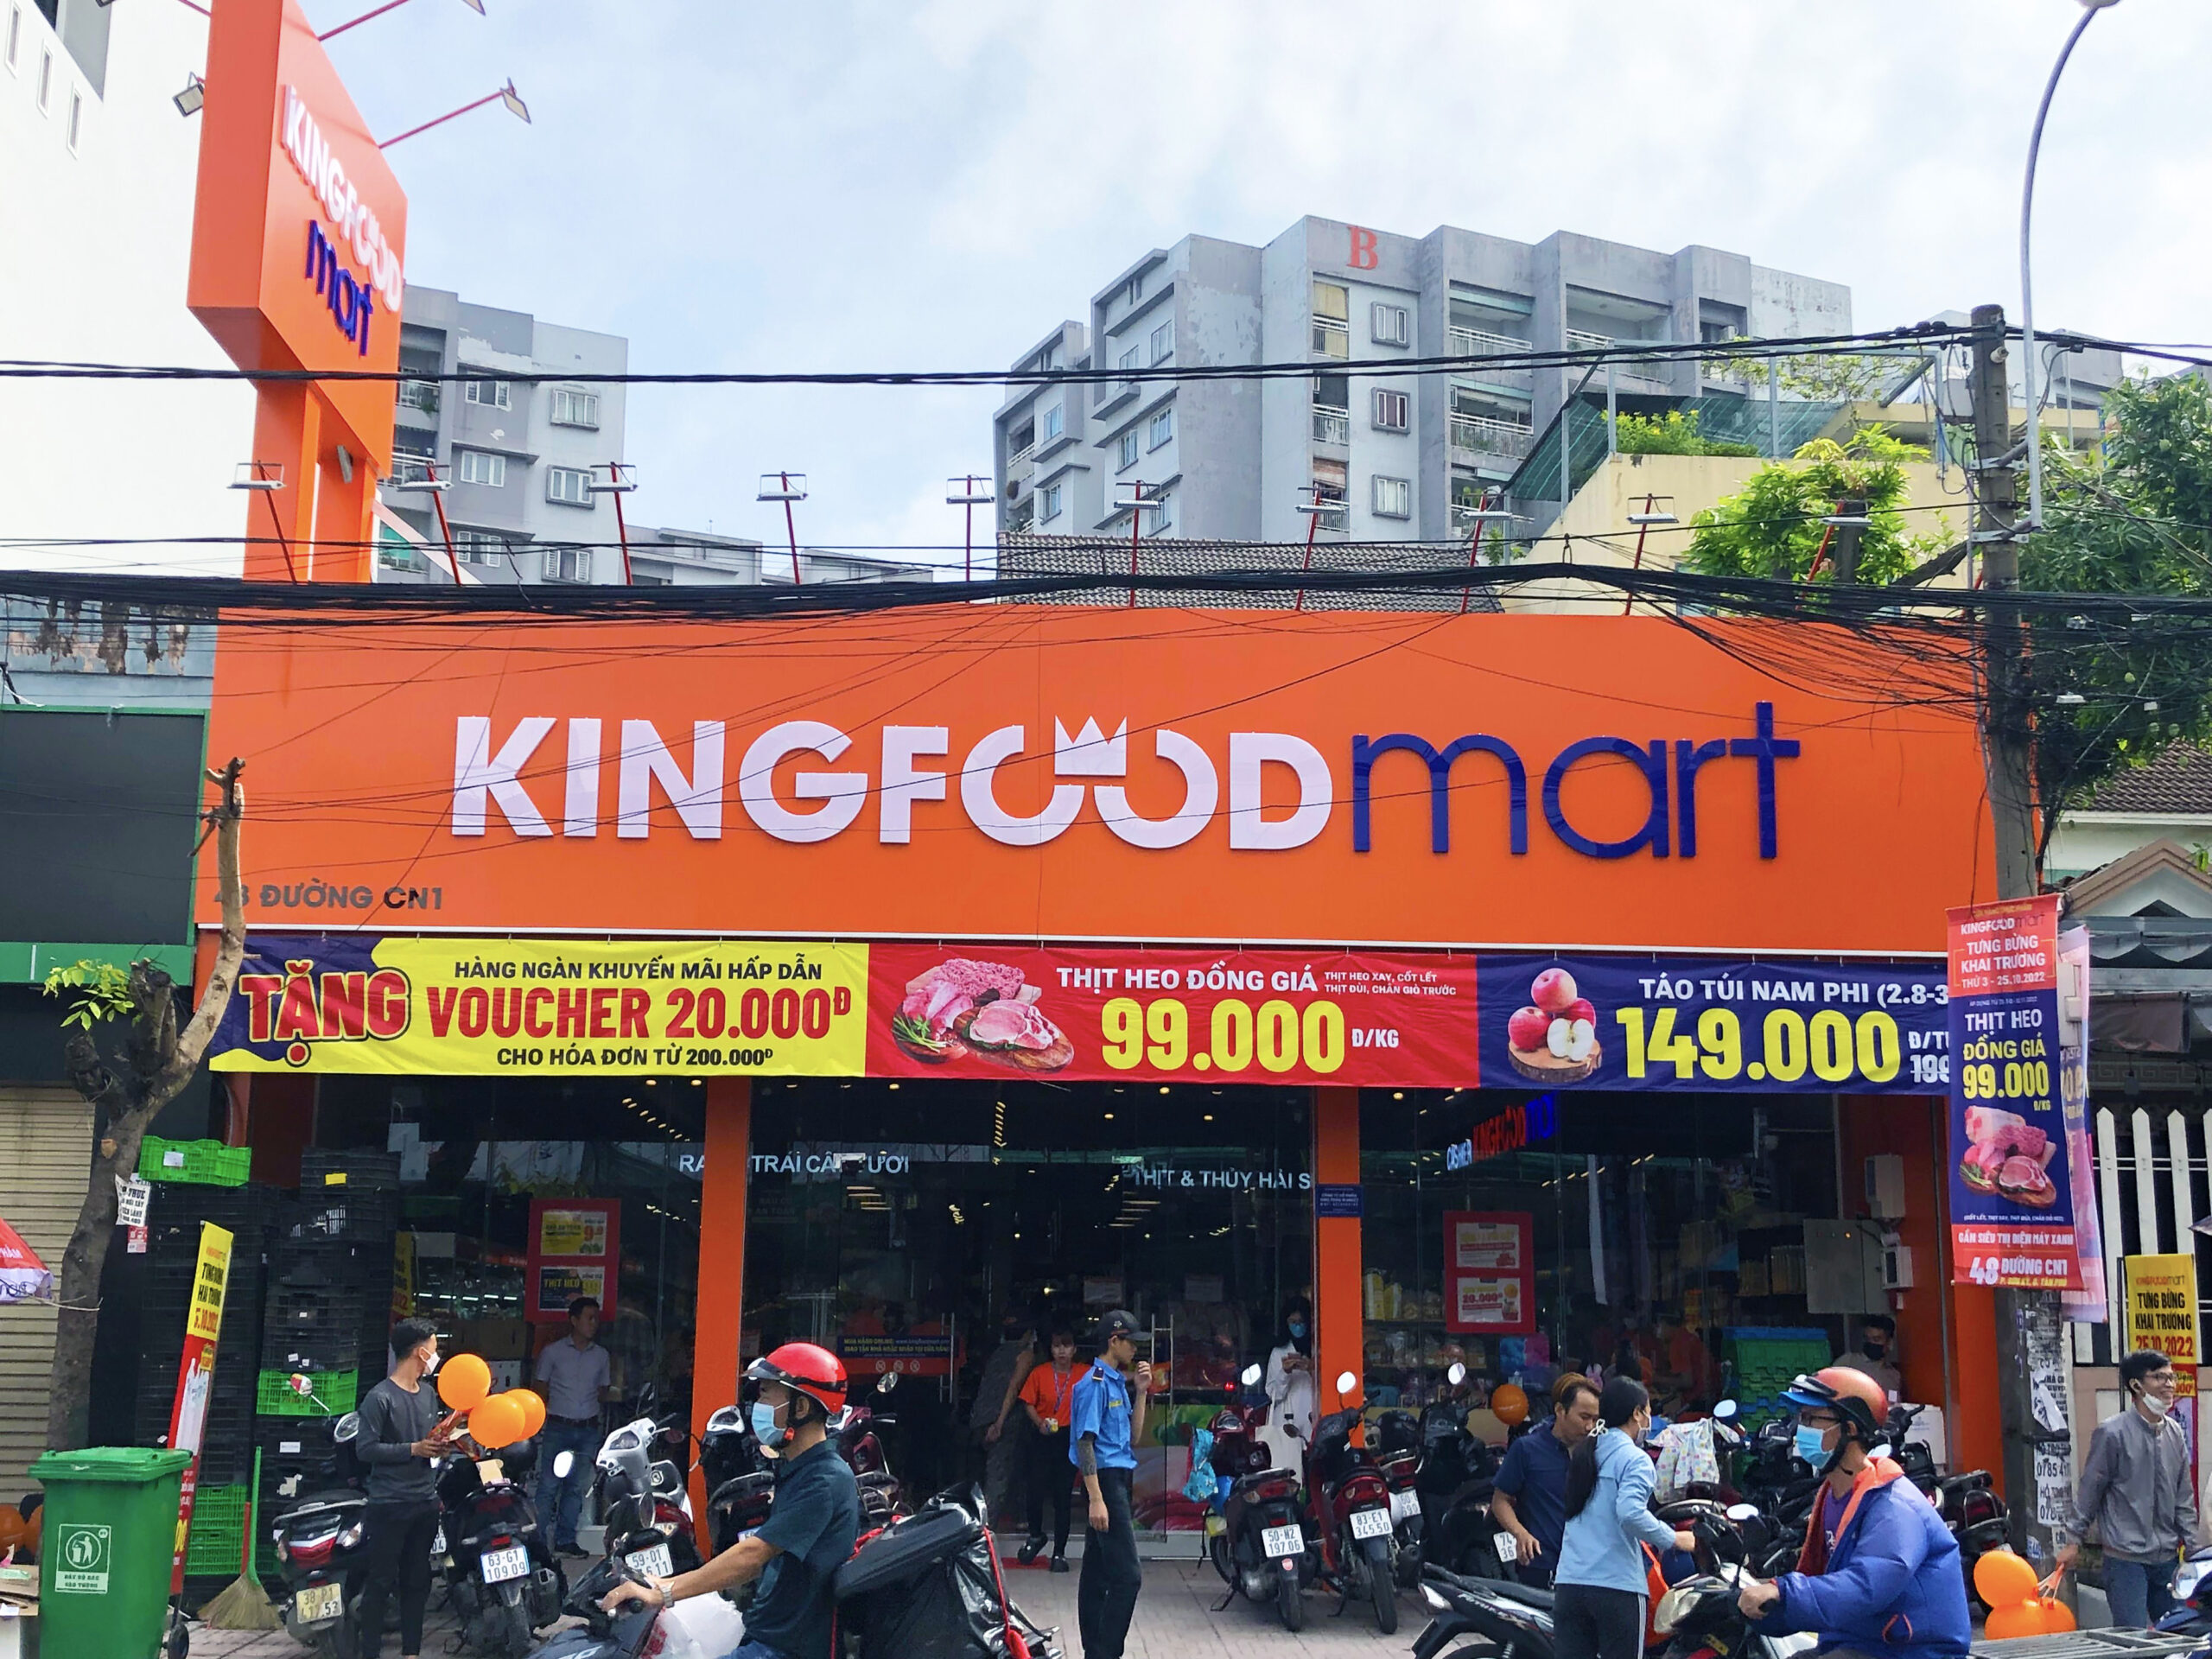 Kingfoodmart CN1, Quận Tân Phú